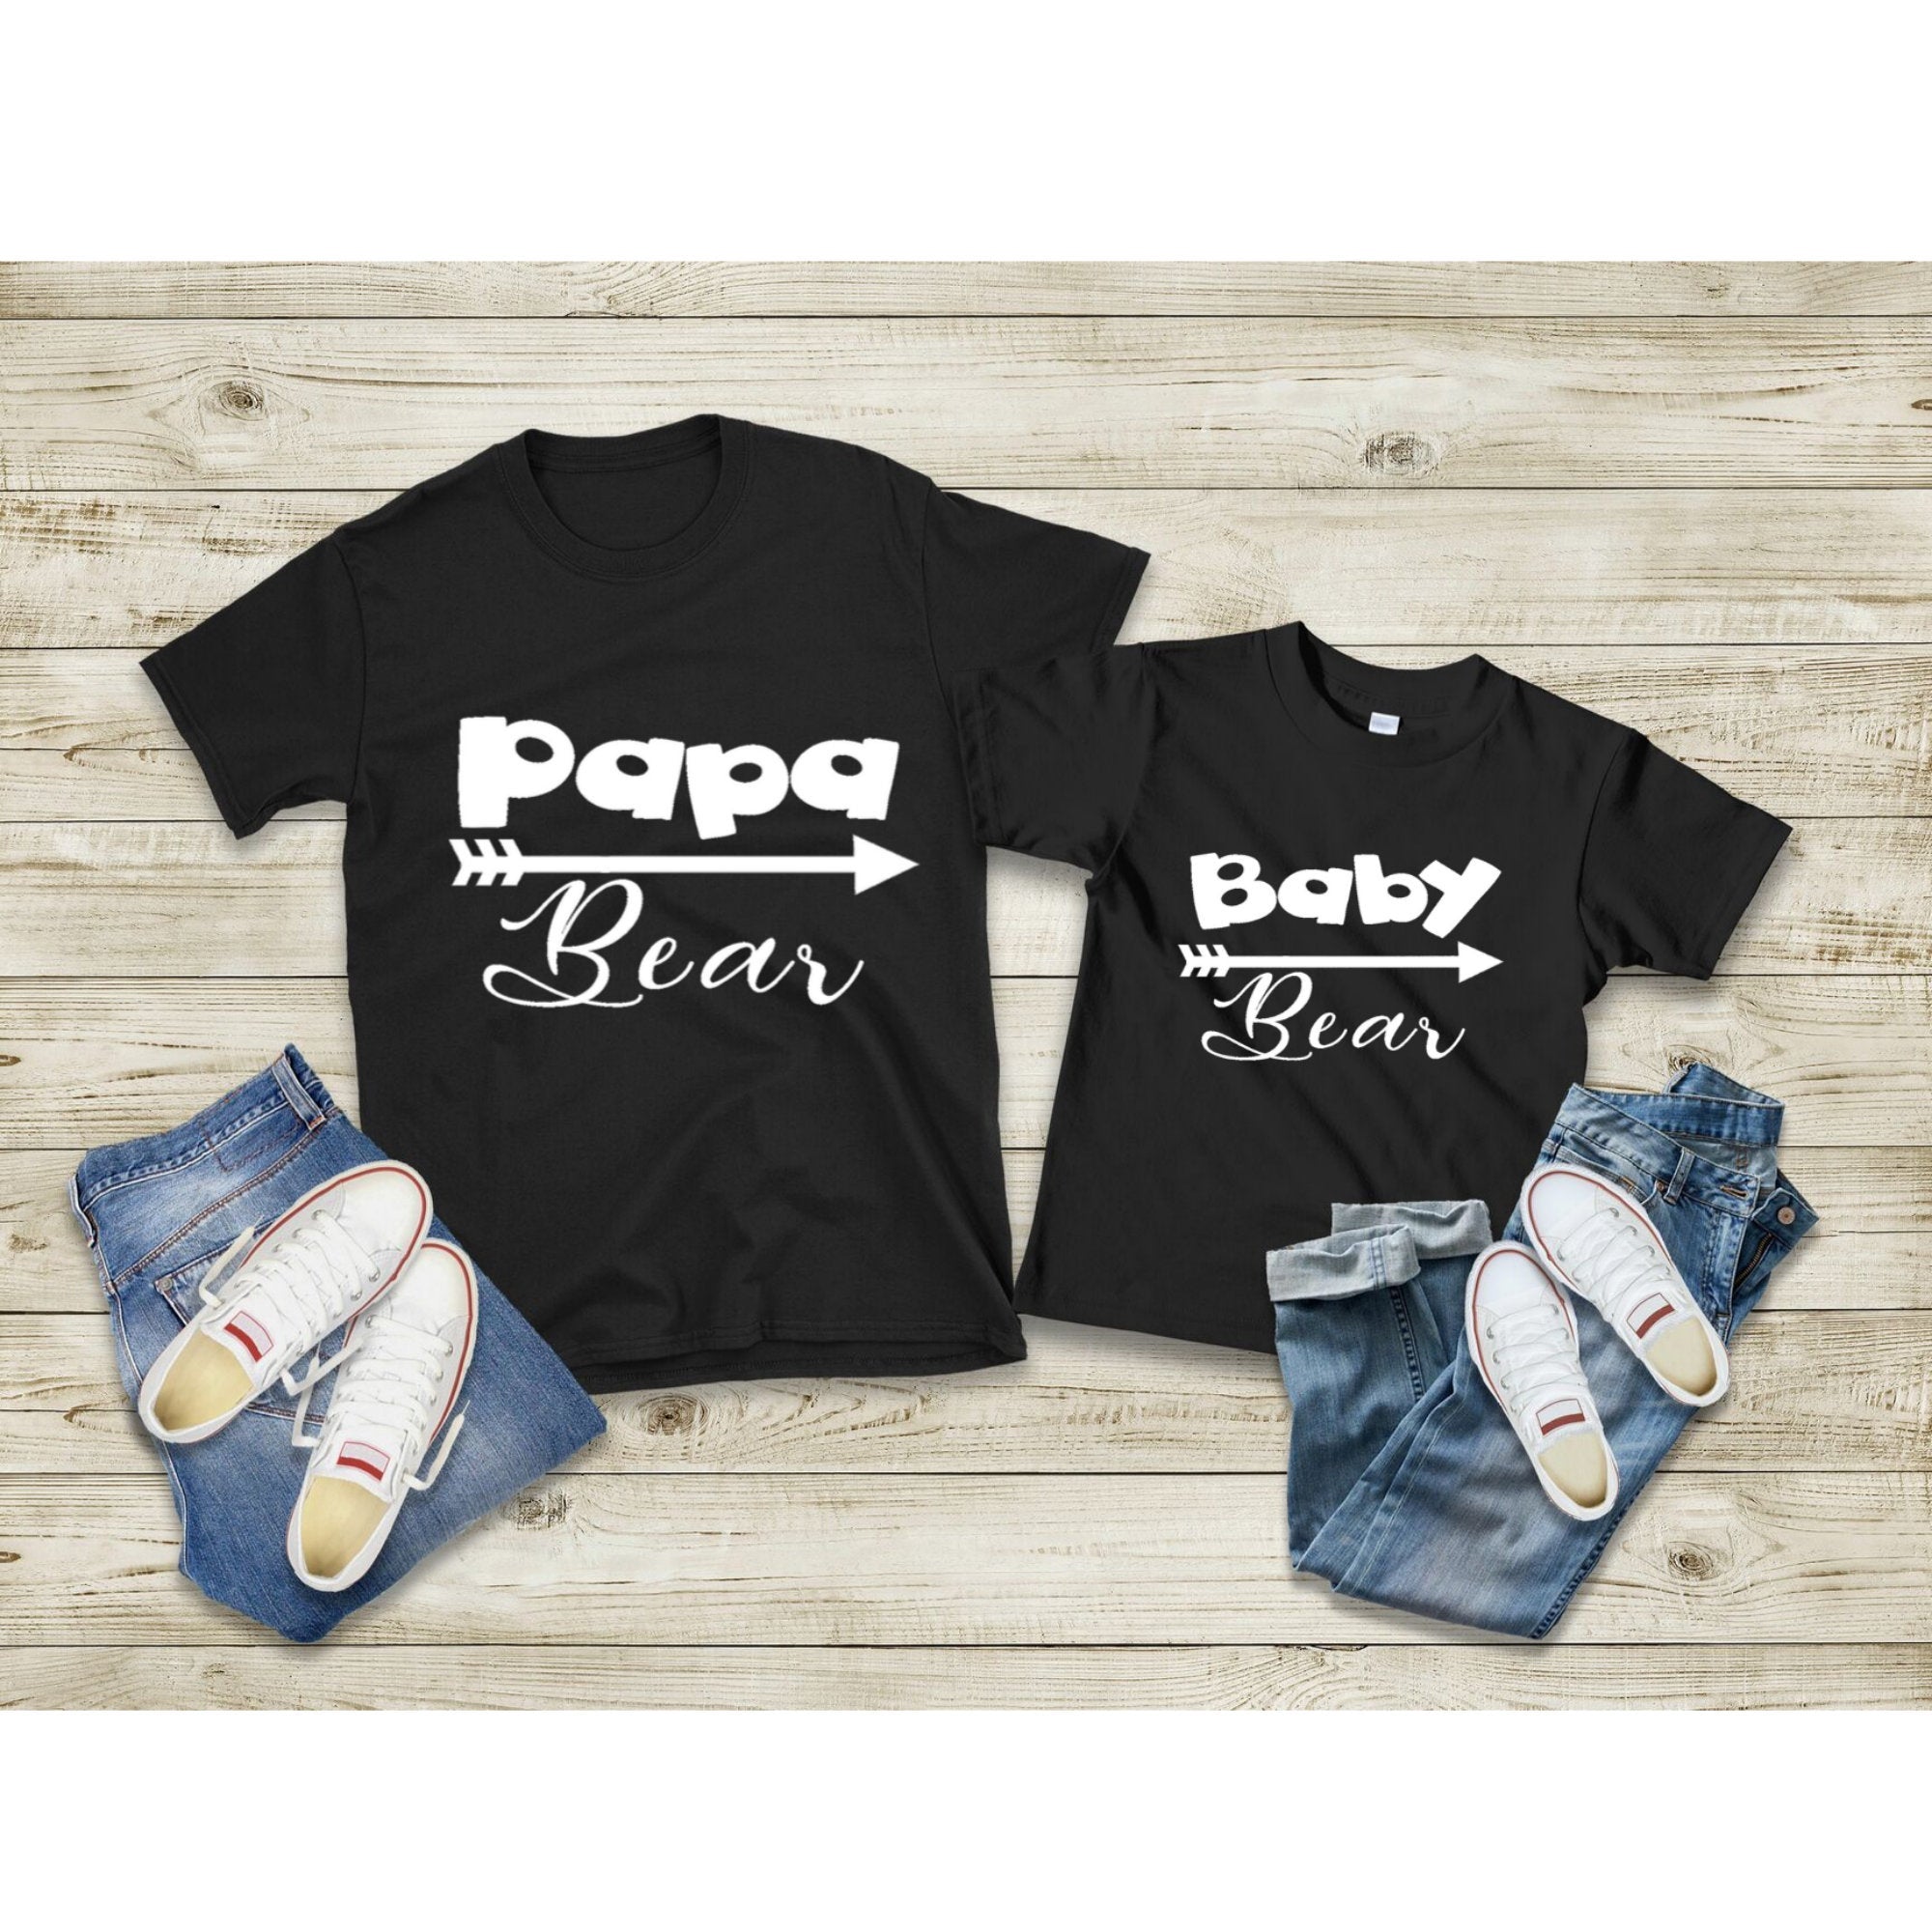 Papa Bear Mens Tee & Baby Bear Toddler/Infant Tee Father daughter Matching Shirts Father Son Matching Shirts - MamaBuzz Creations